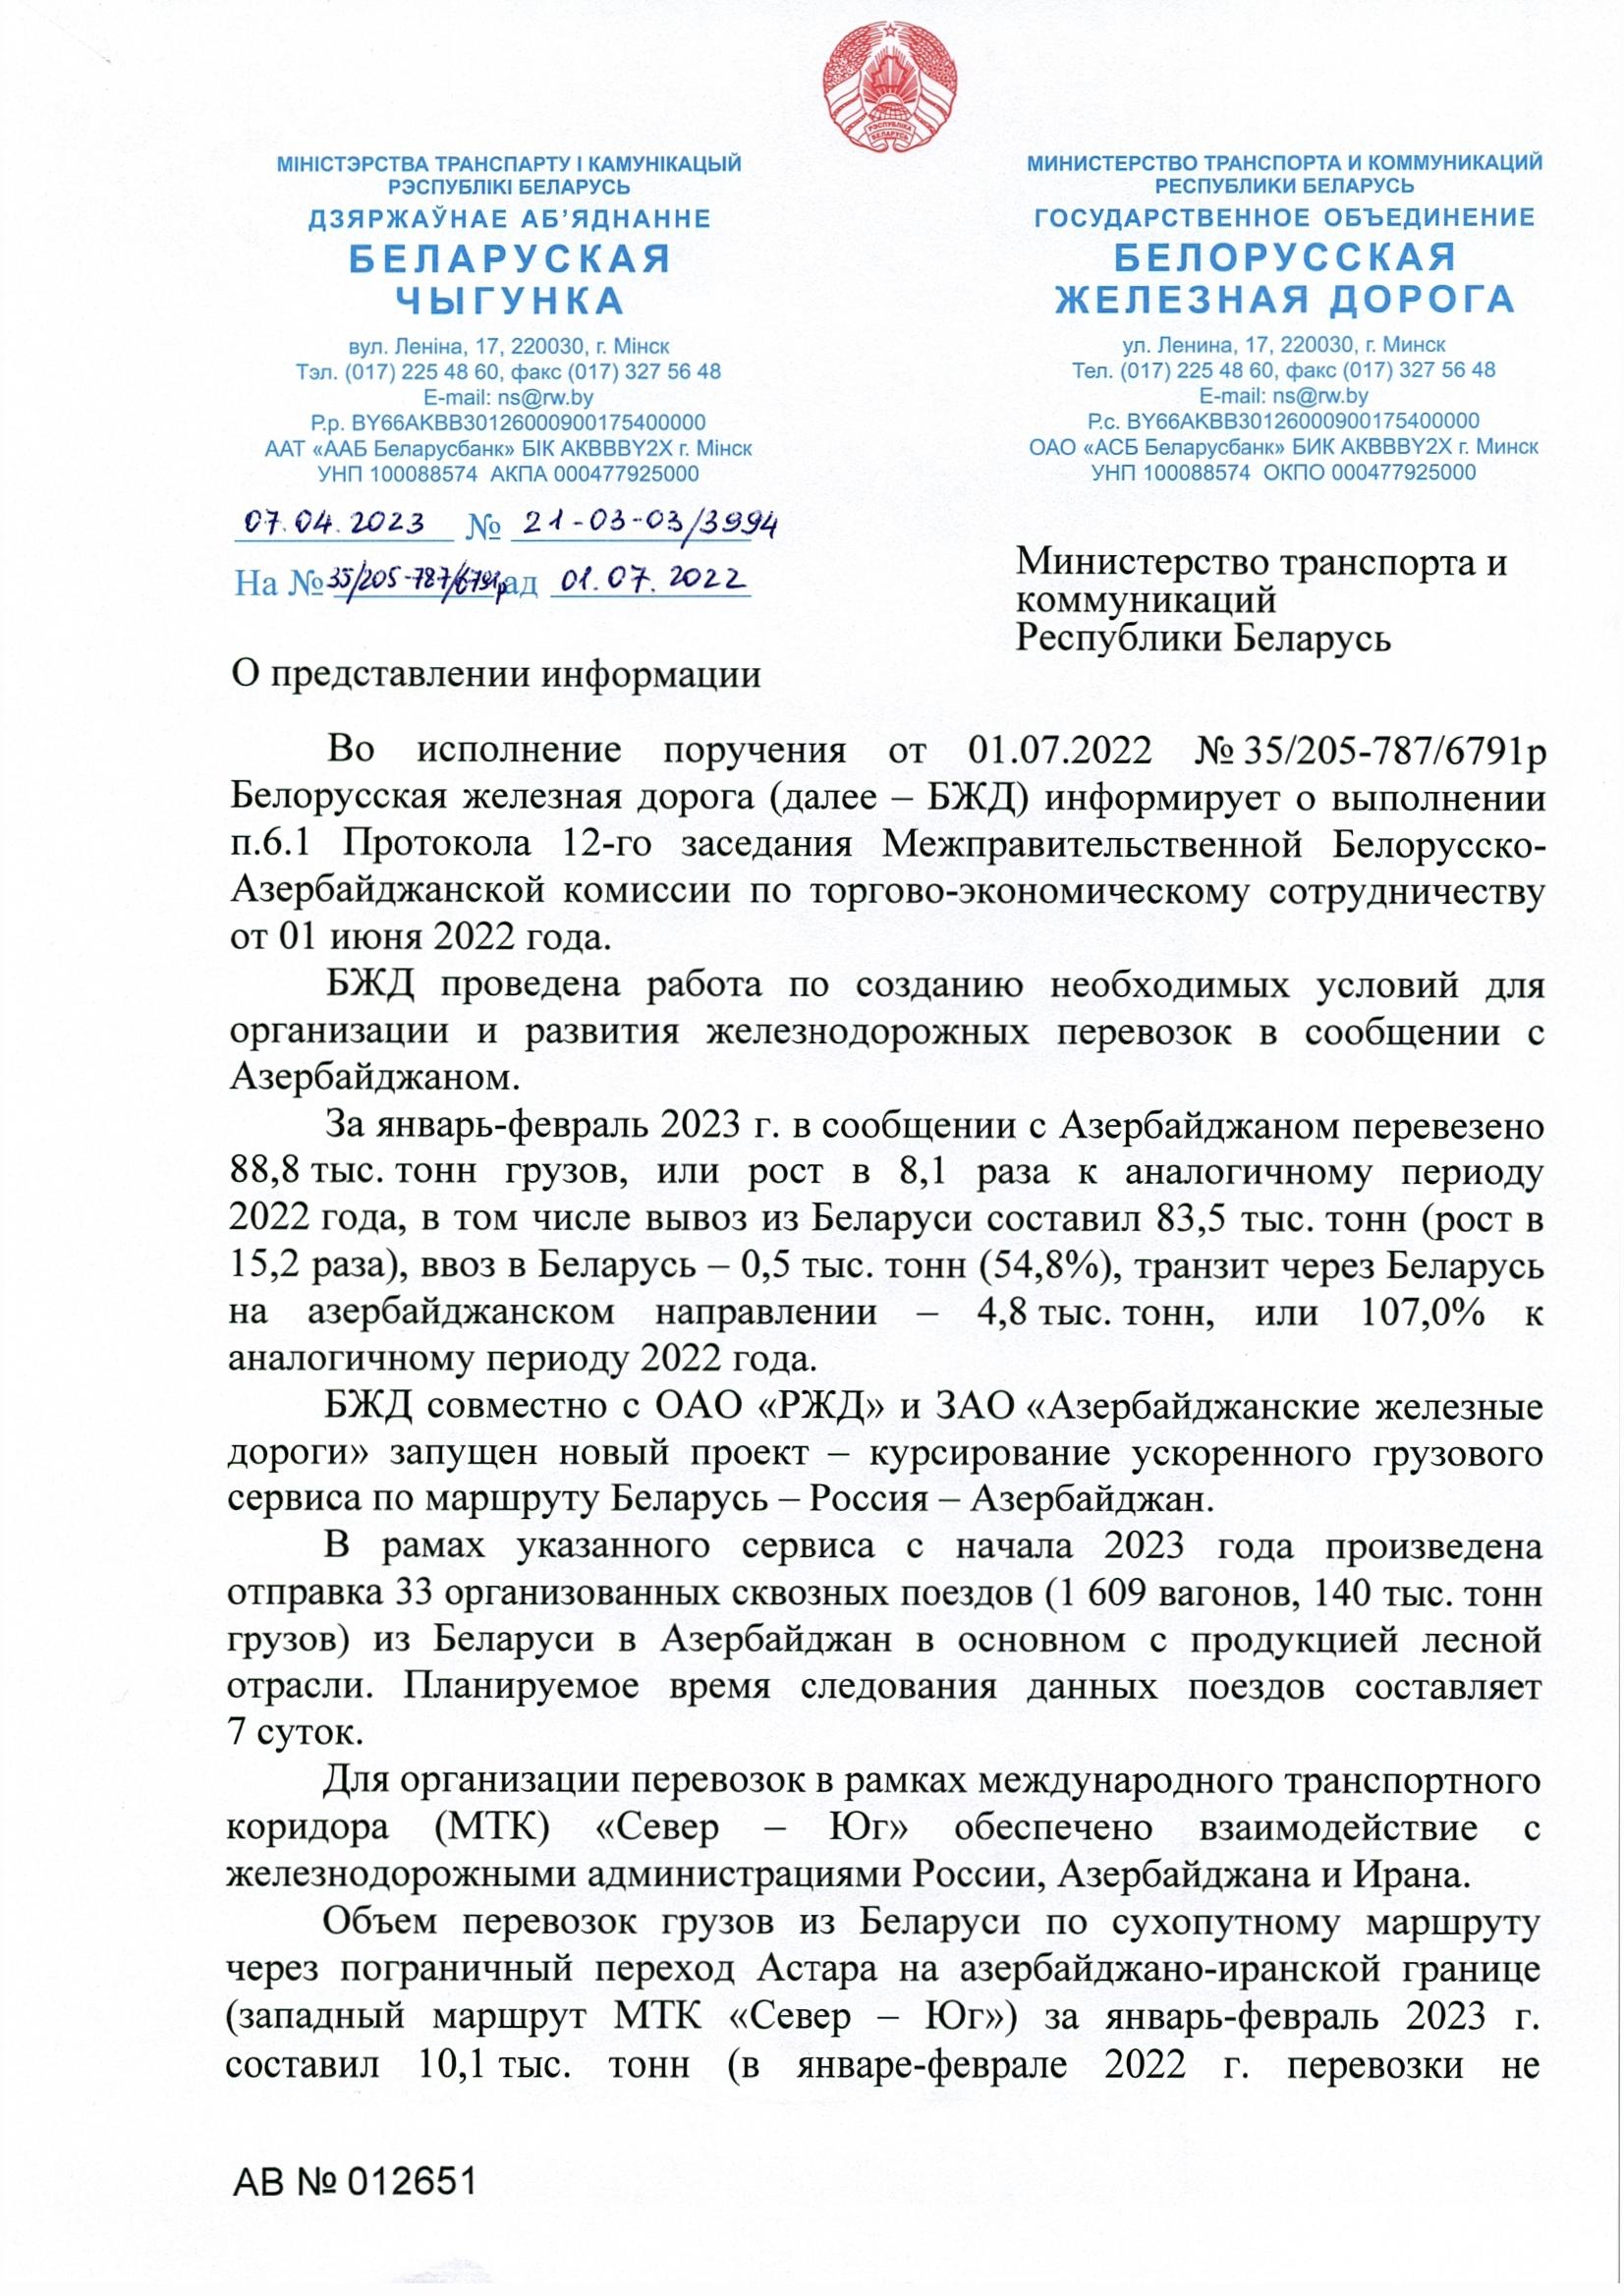 Письмо БЖД в Министерство транспорта от 07.04.2023 (Страница 1)